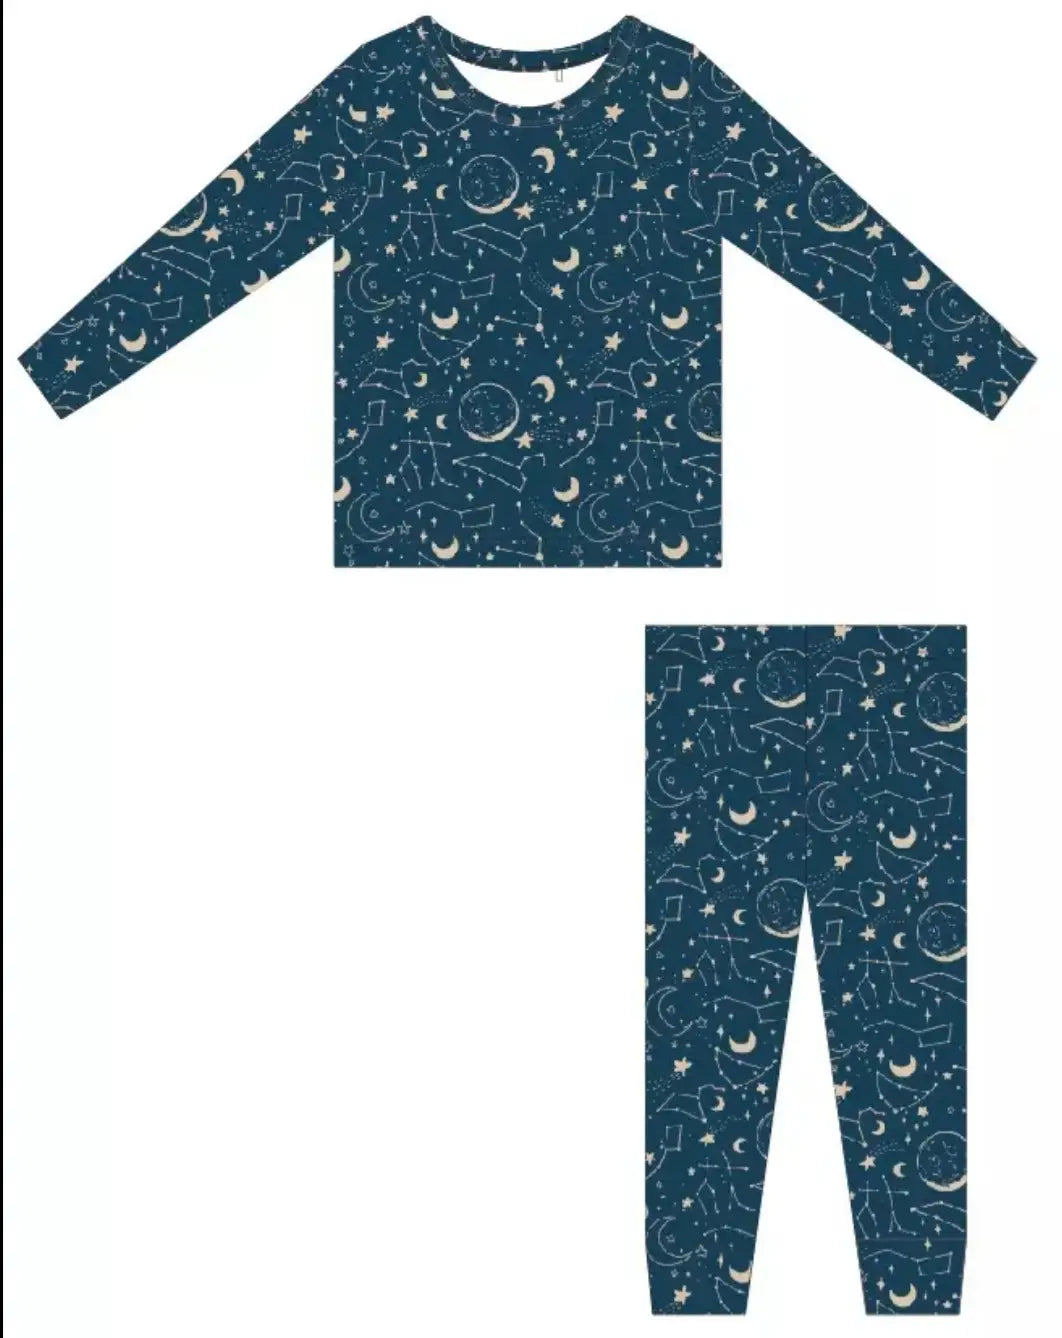 Bamboo Toddler Two-Piece Pajama- Constellation